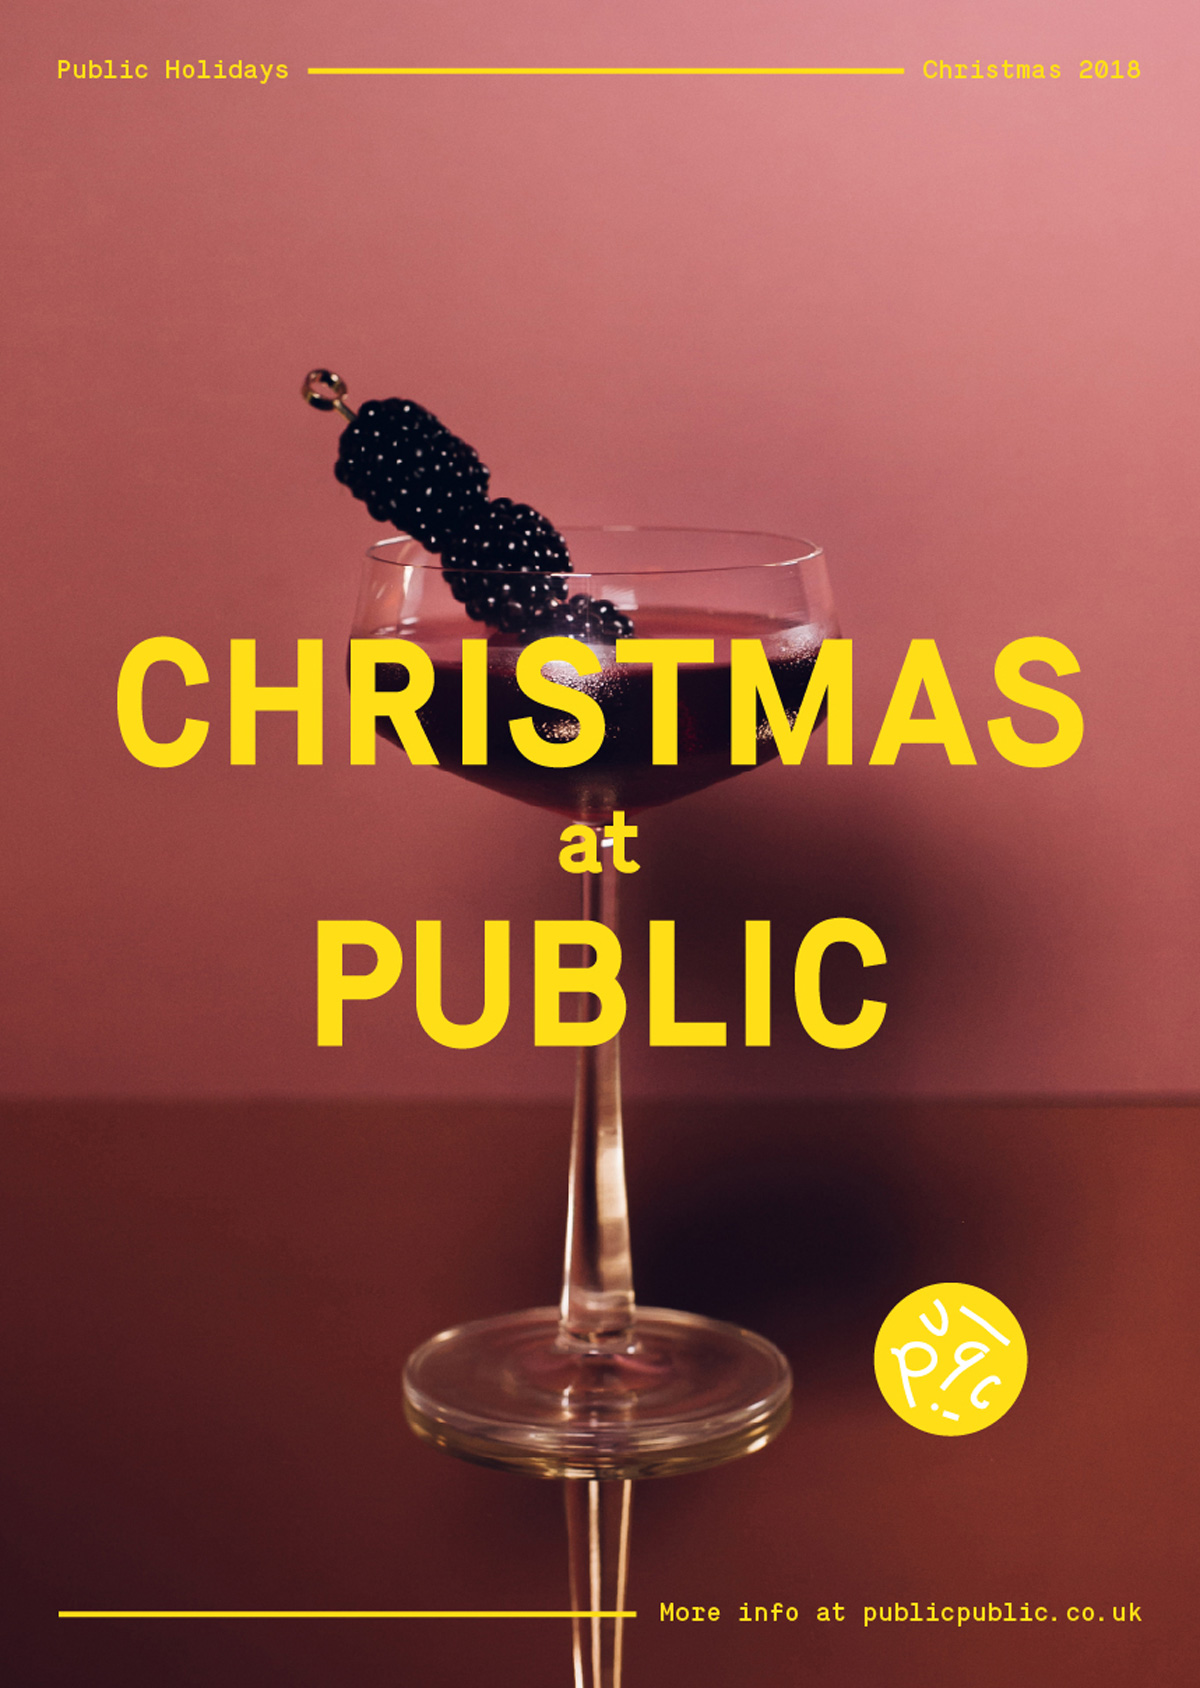 Public christmas poster